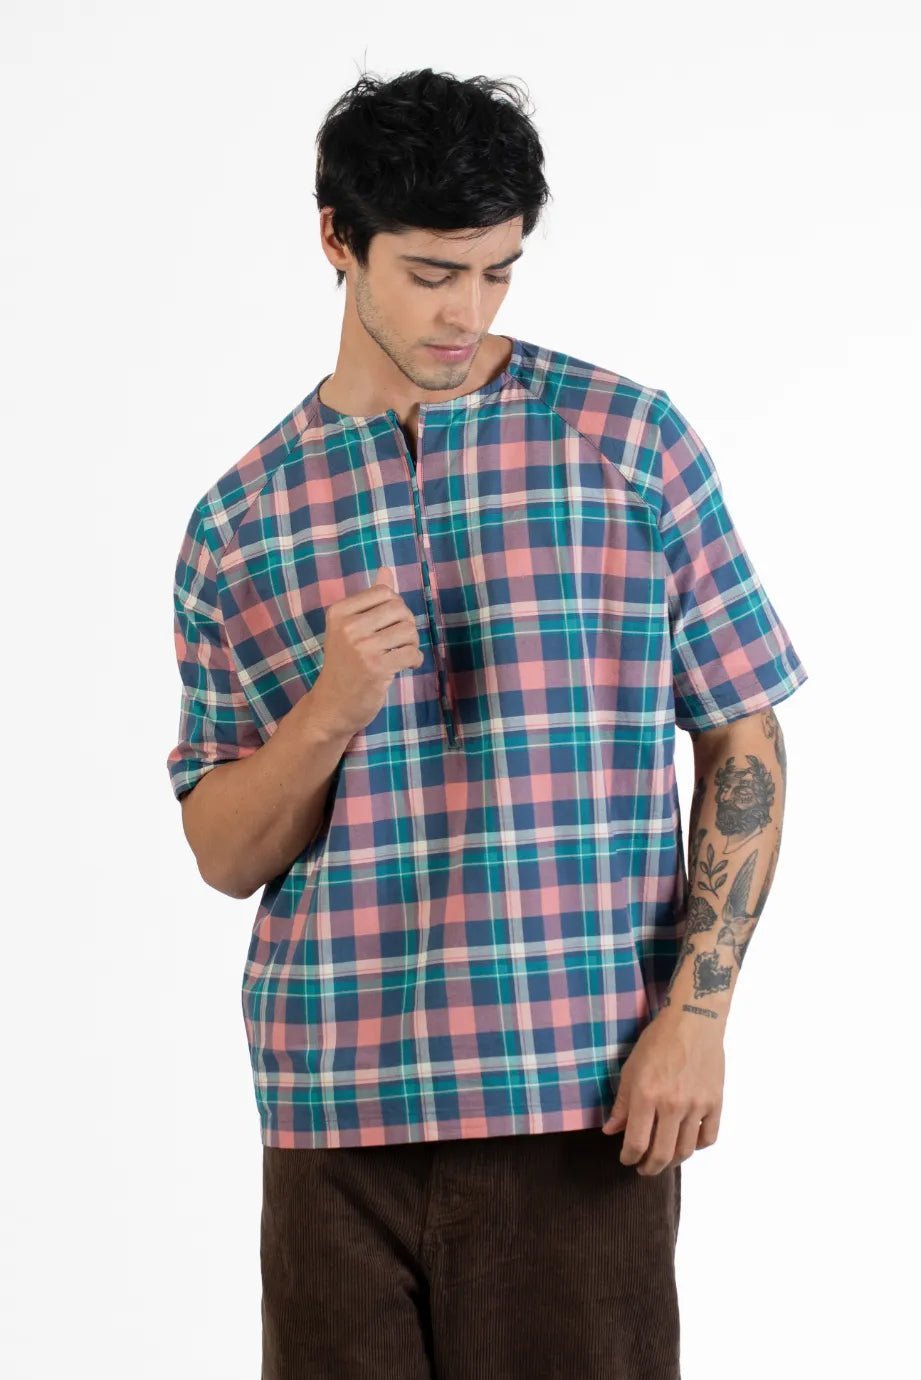 Buy Raglan Half Sleeve Checks Shirts Online